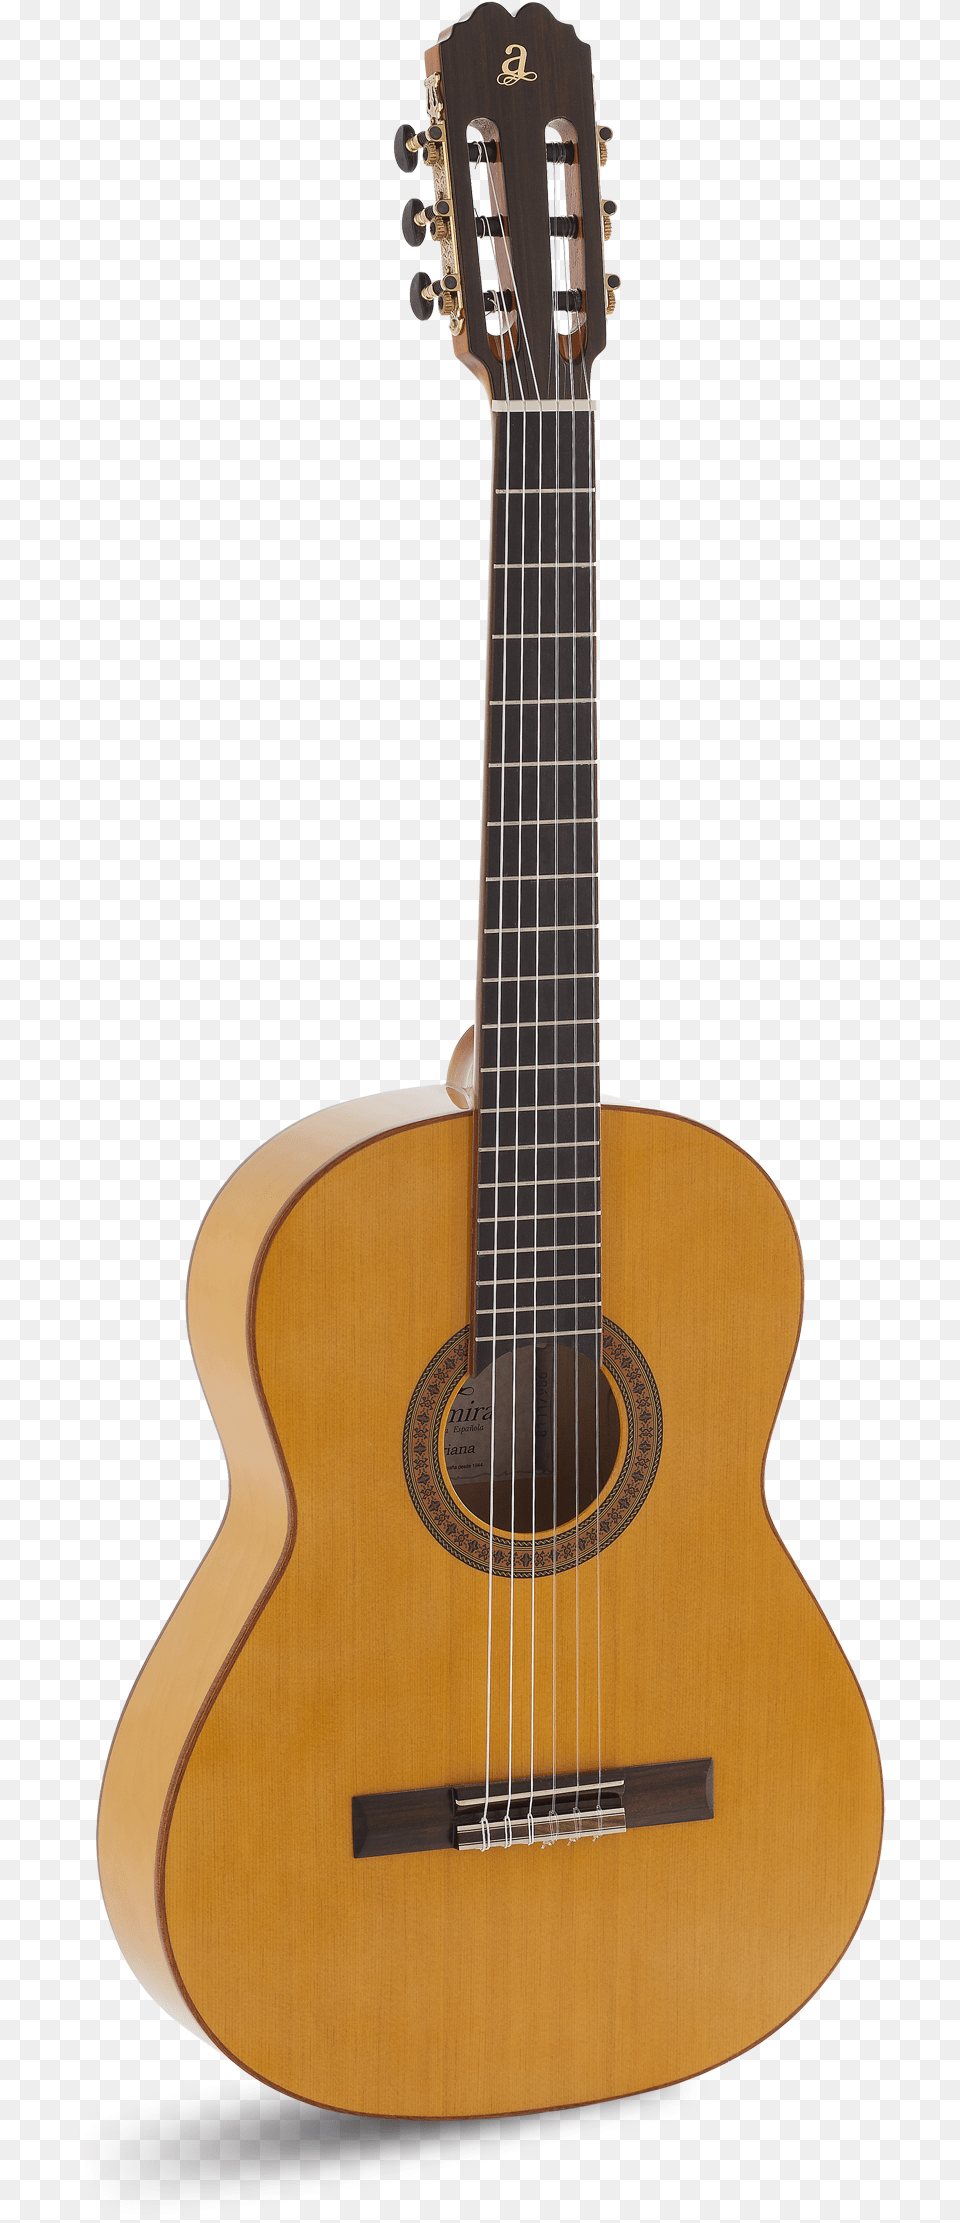 Acoustic Guitar, Musical Instrument, Bass Guitar Png Image